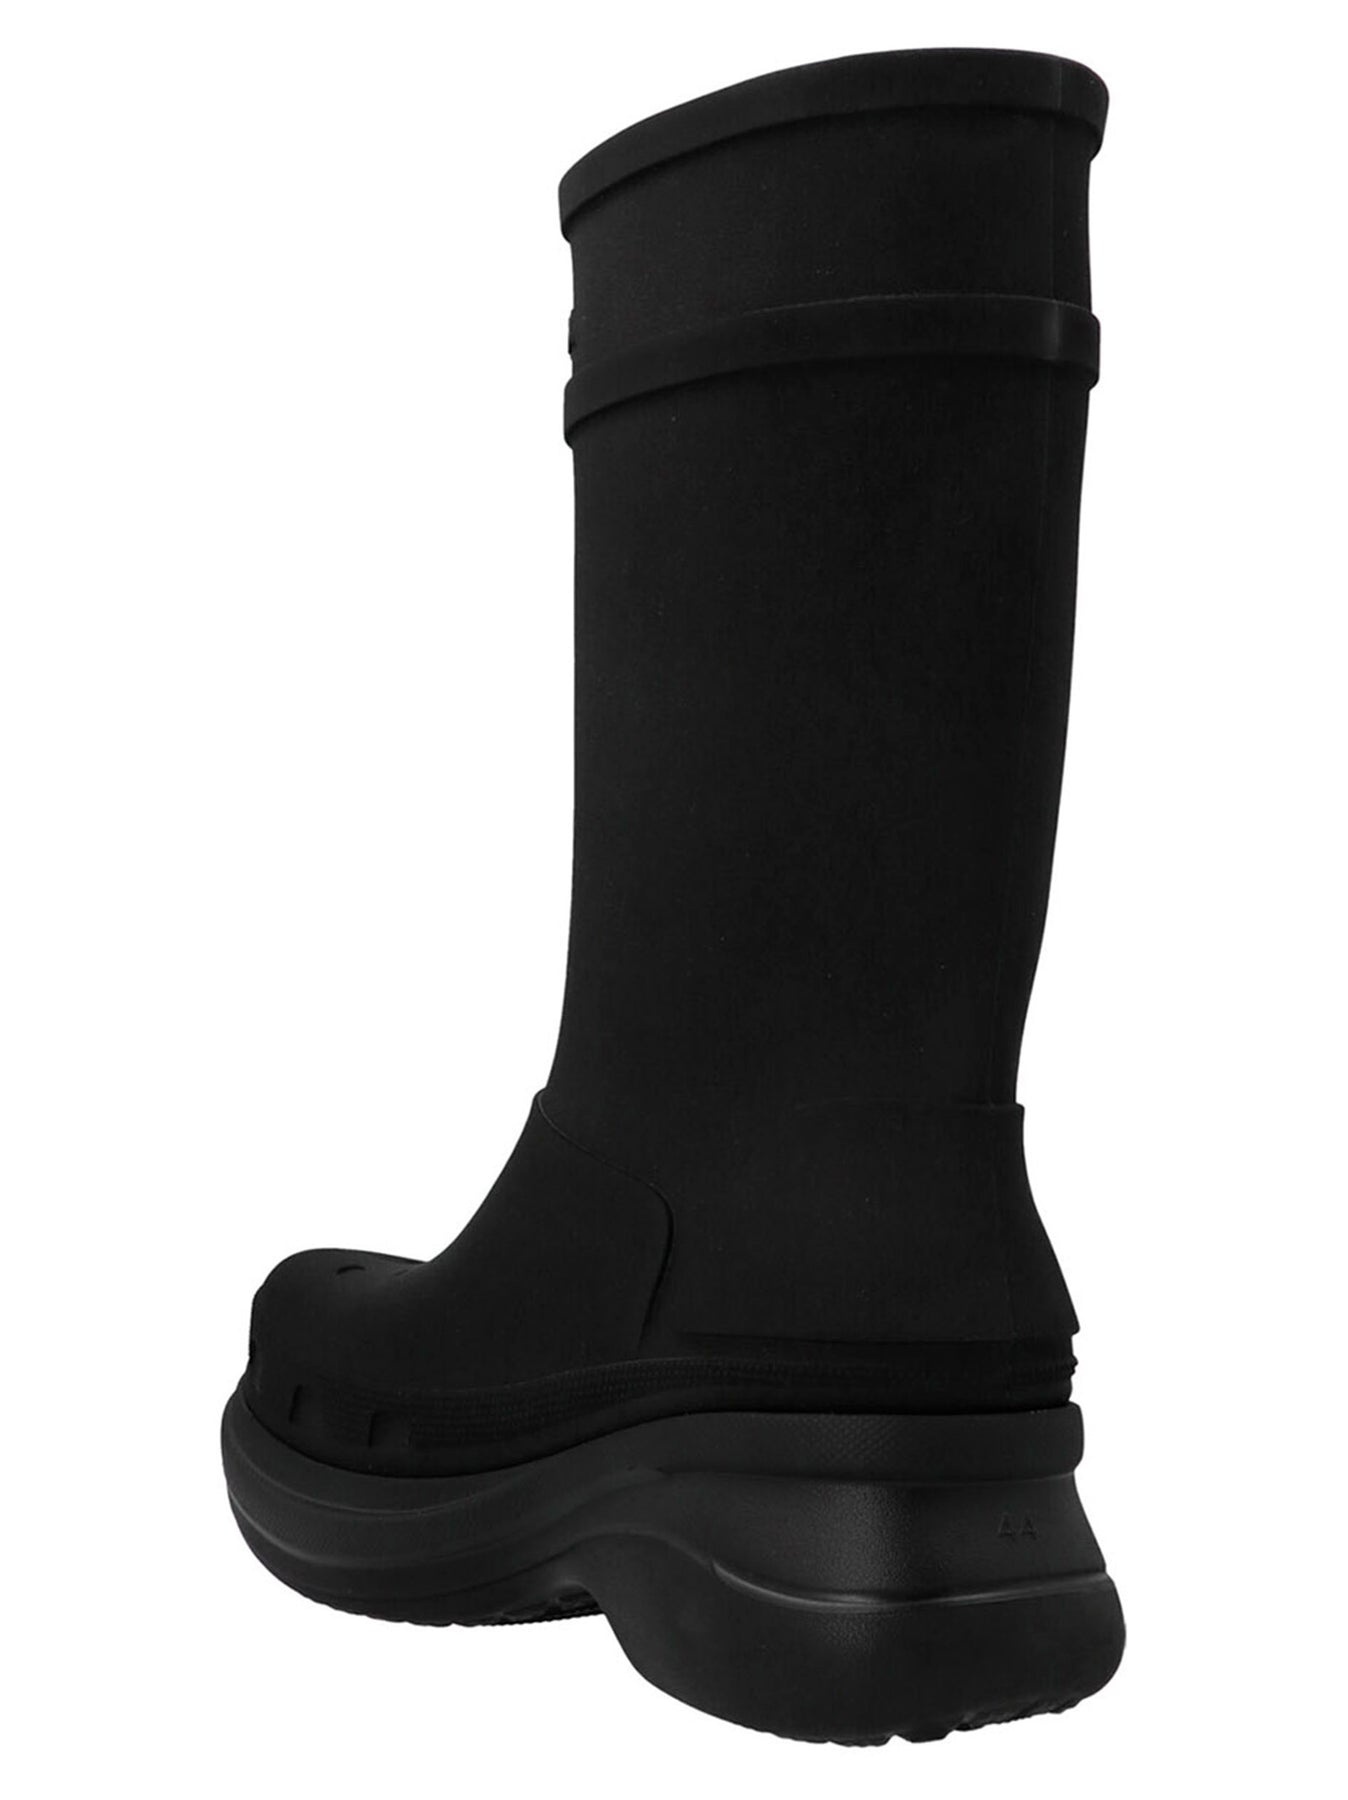 Balenciaga X Crocs Boots Boots, Ankle Boots Black - 3